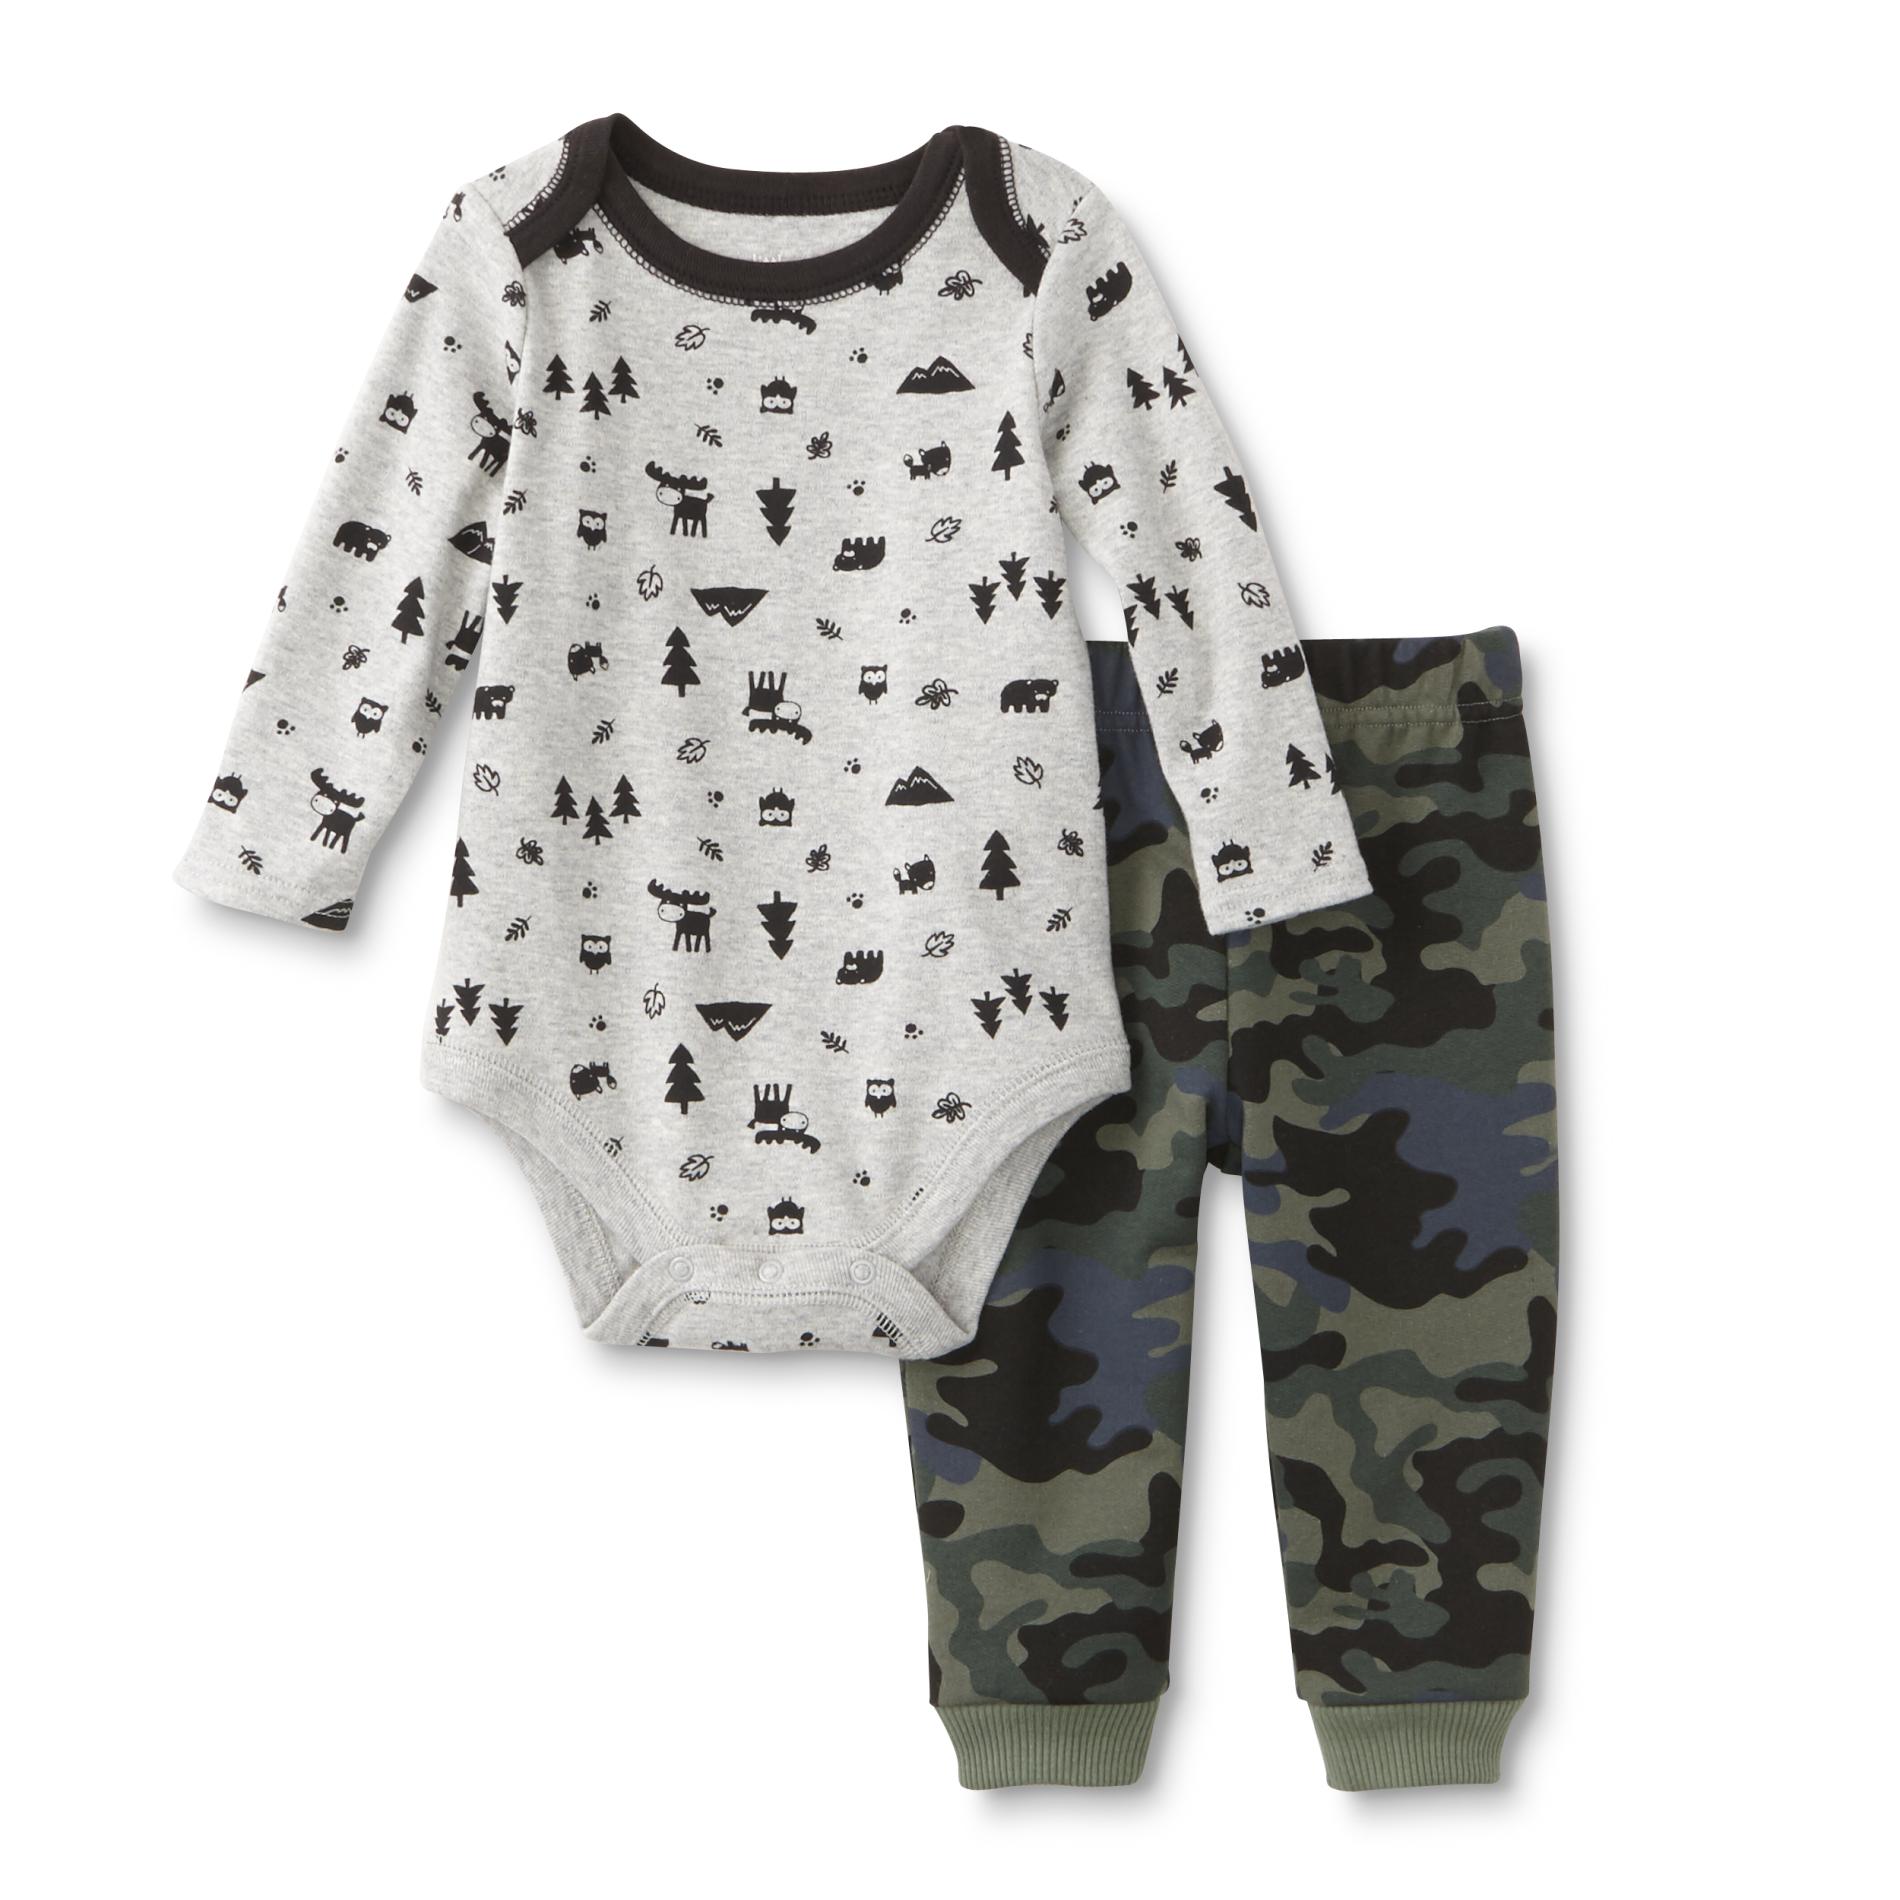 Little Wonders Newborn & Infant Boy's Bodysuit & Sweatpants - Camo